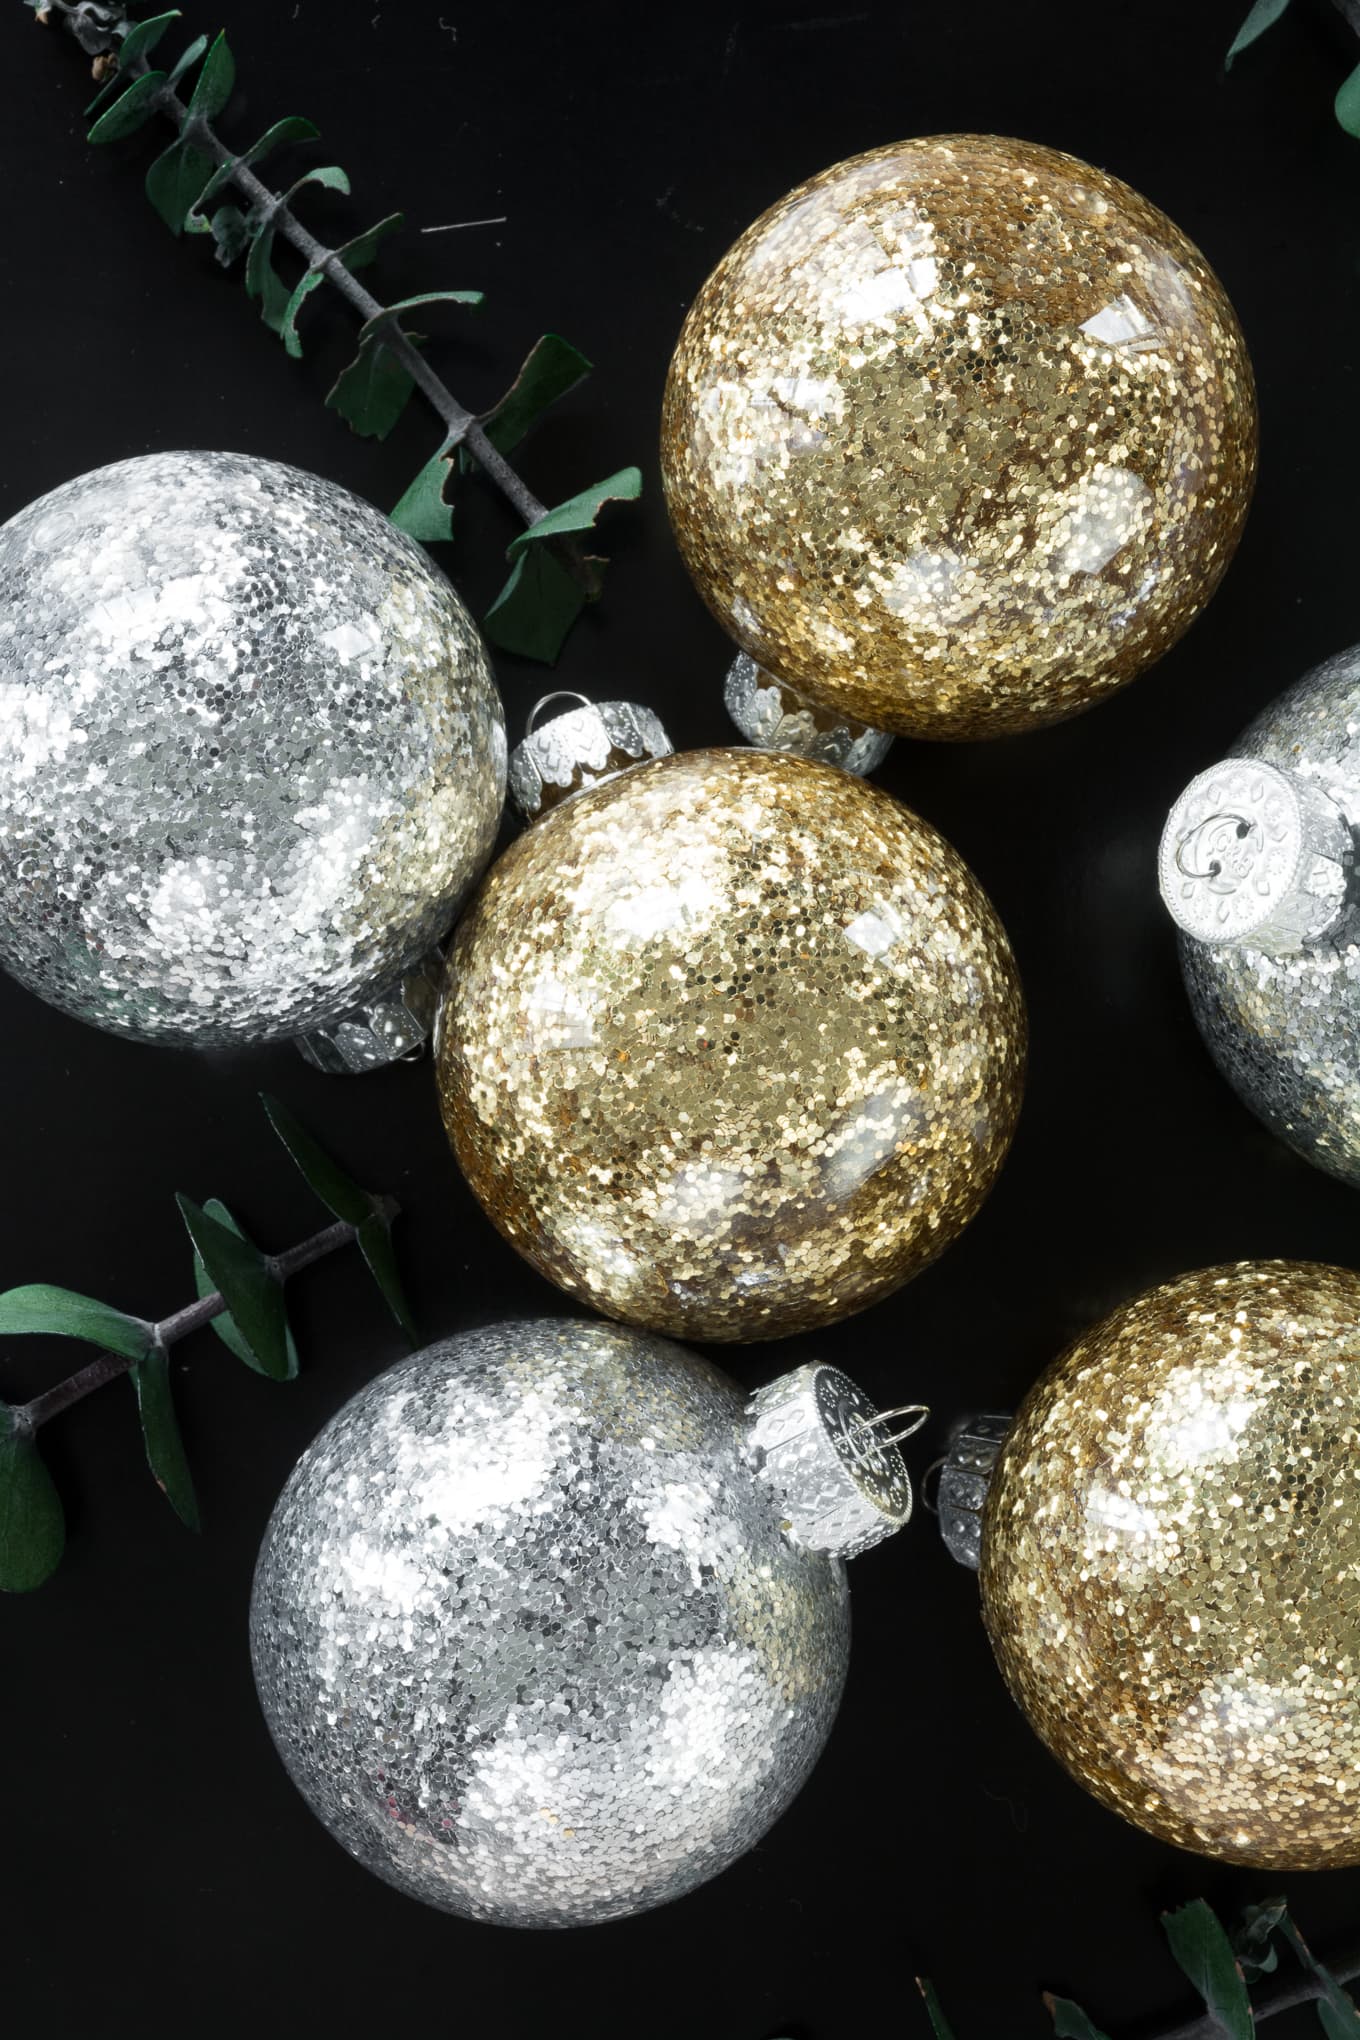 Easy DIY Glitter Ornaments For Beginners 